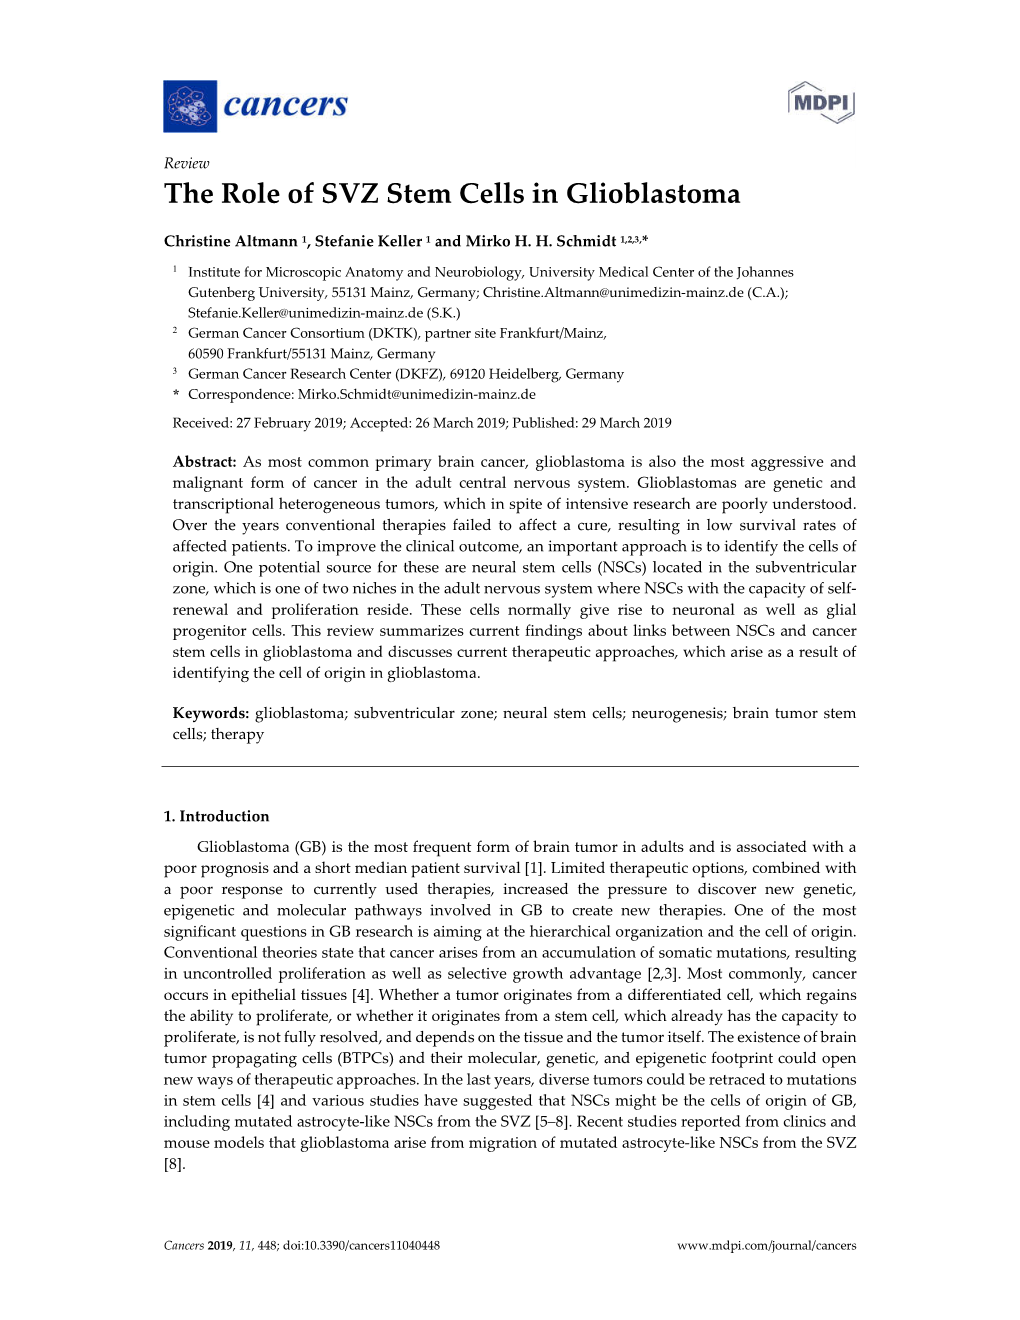 The Role of SVZ Stem Cells in Glioblastoma